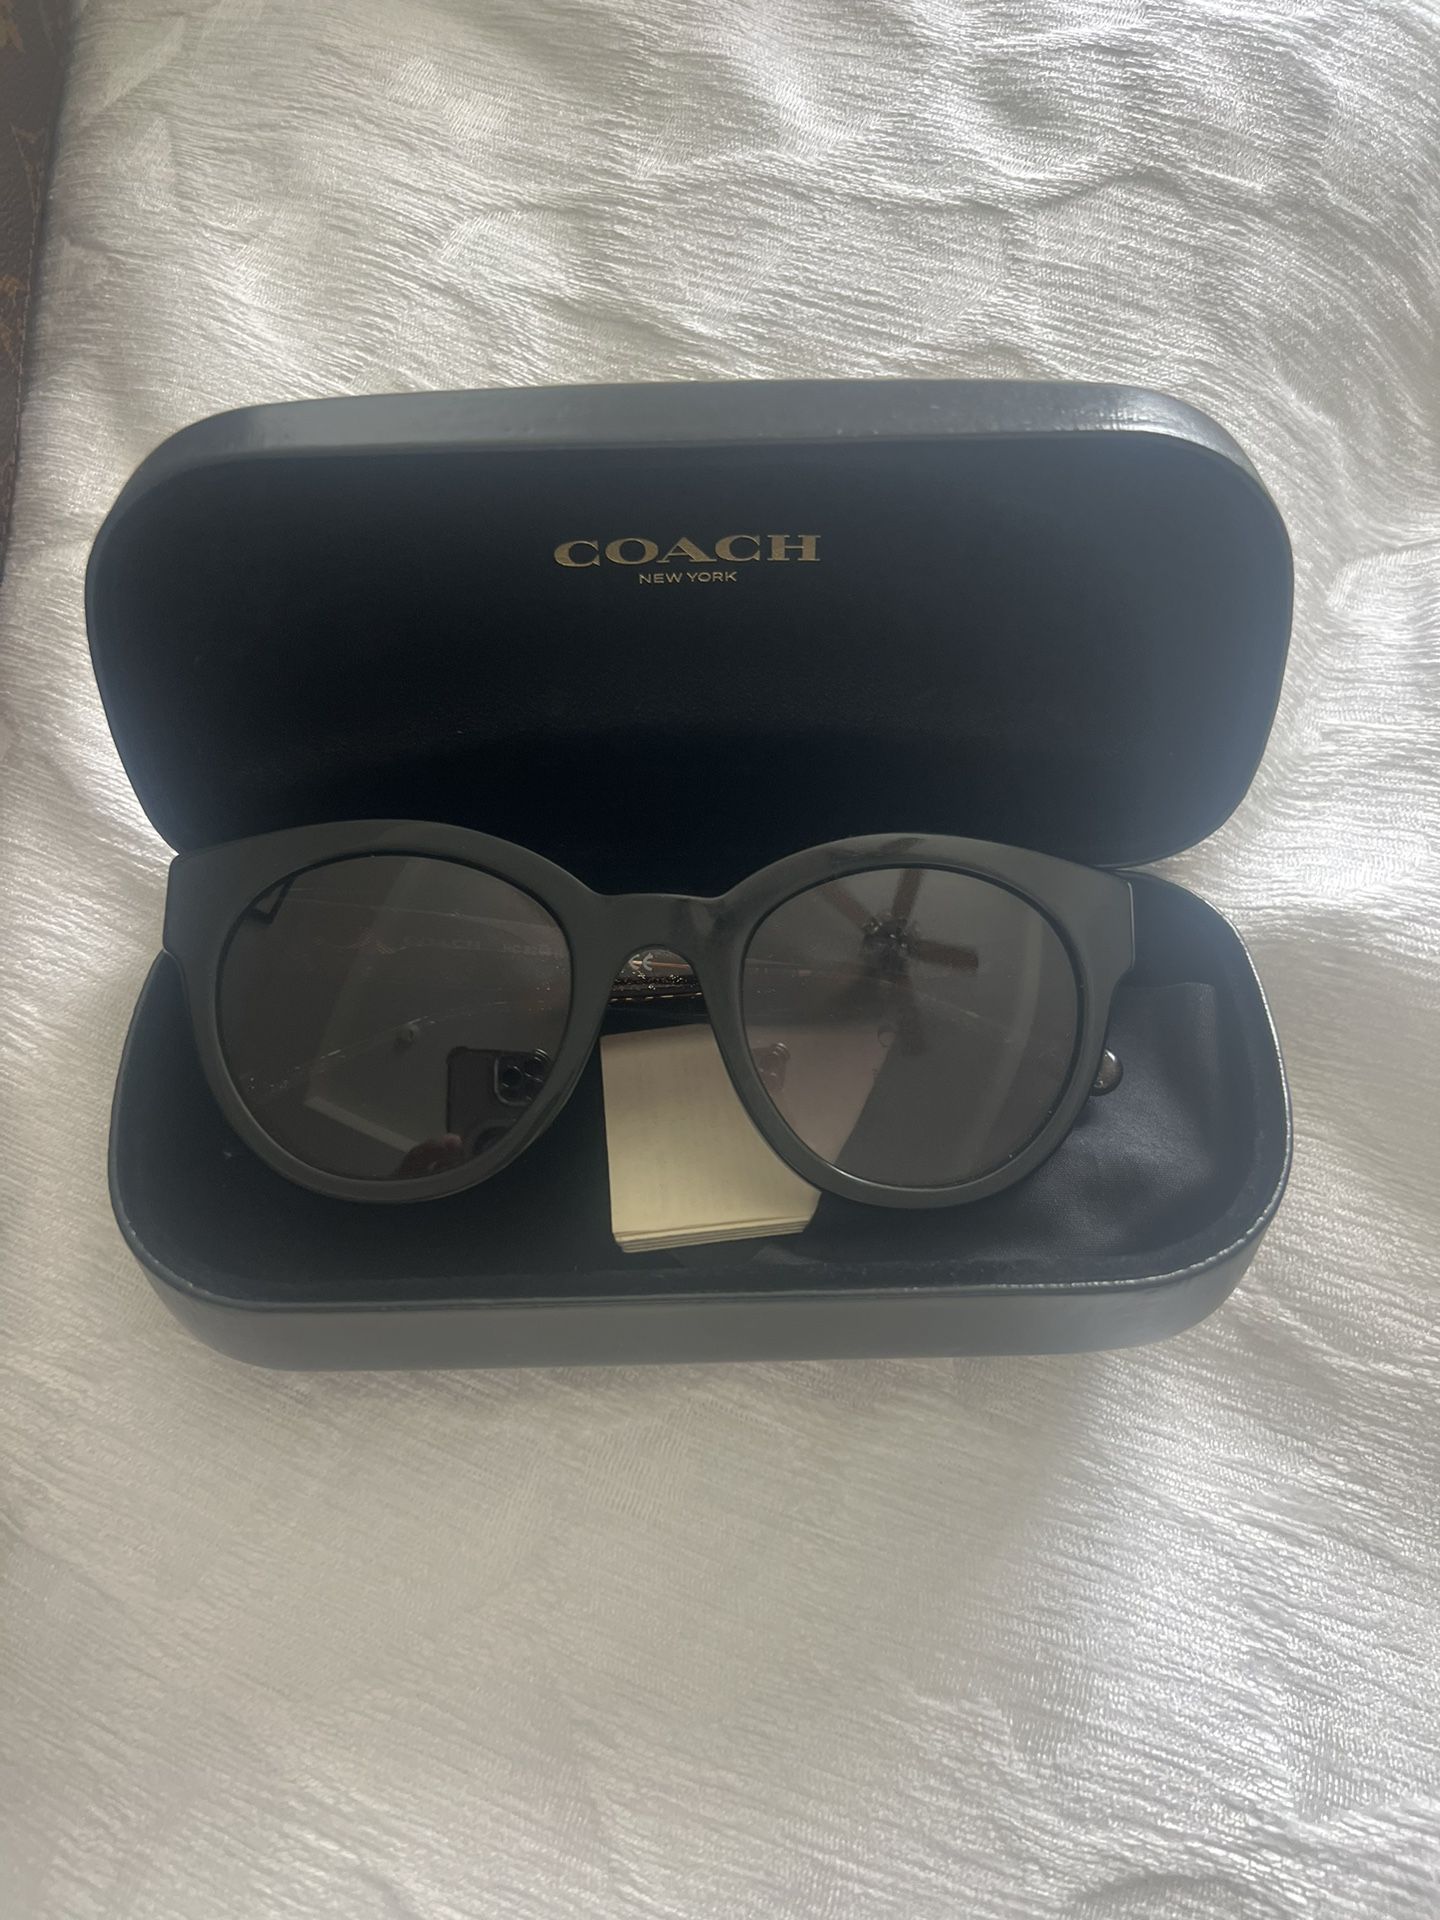 Coach Sunglasses